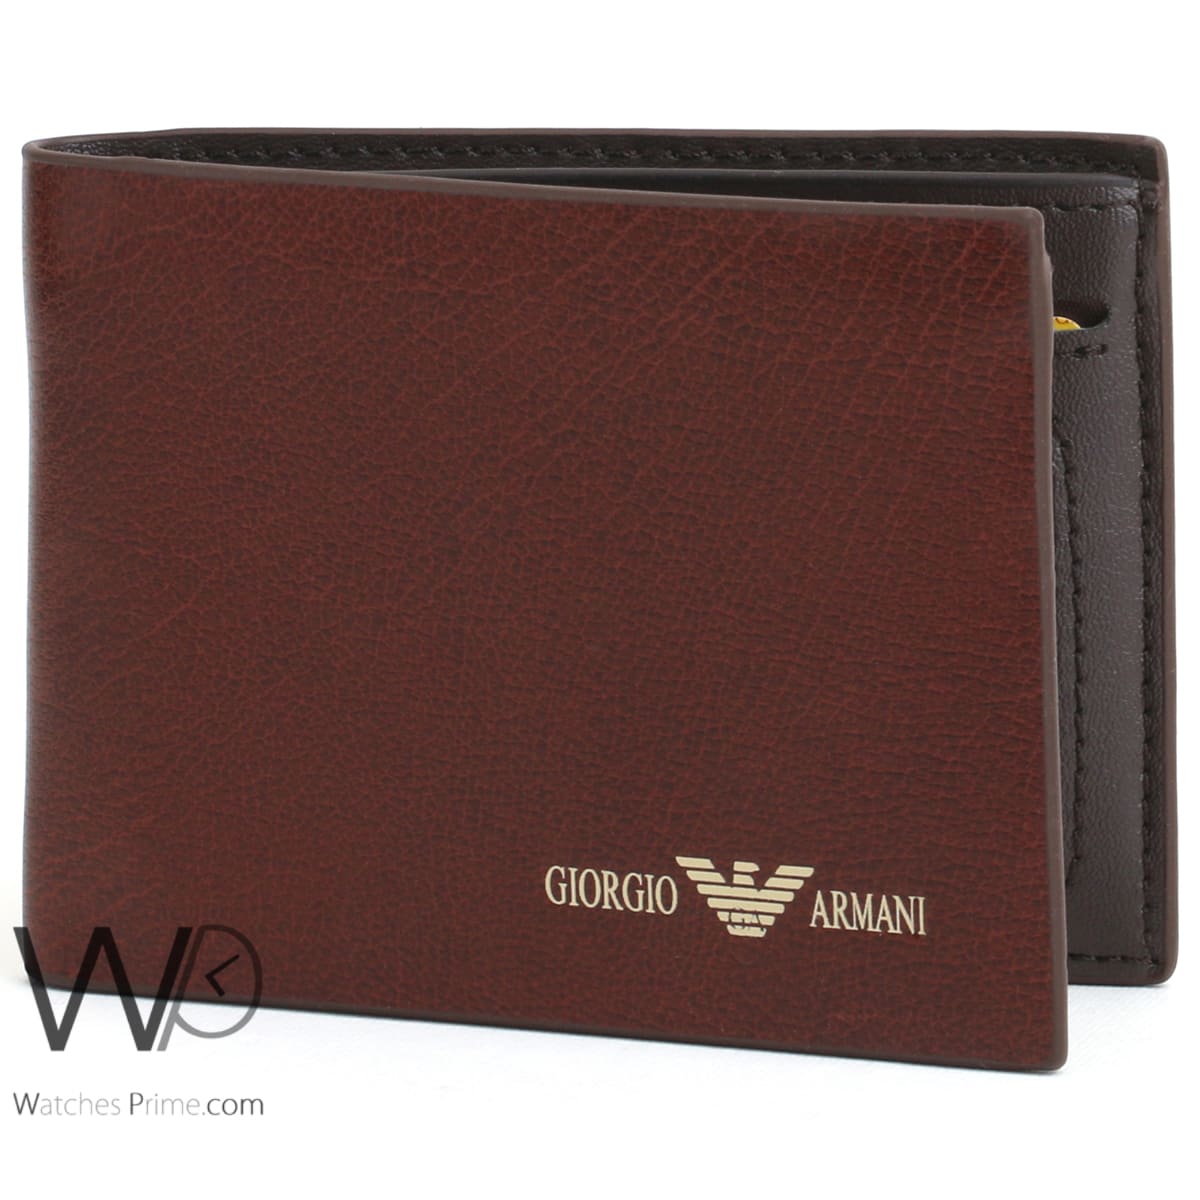 Giorgio Armani wallet for men brown | Watches Prime